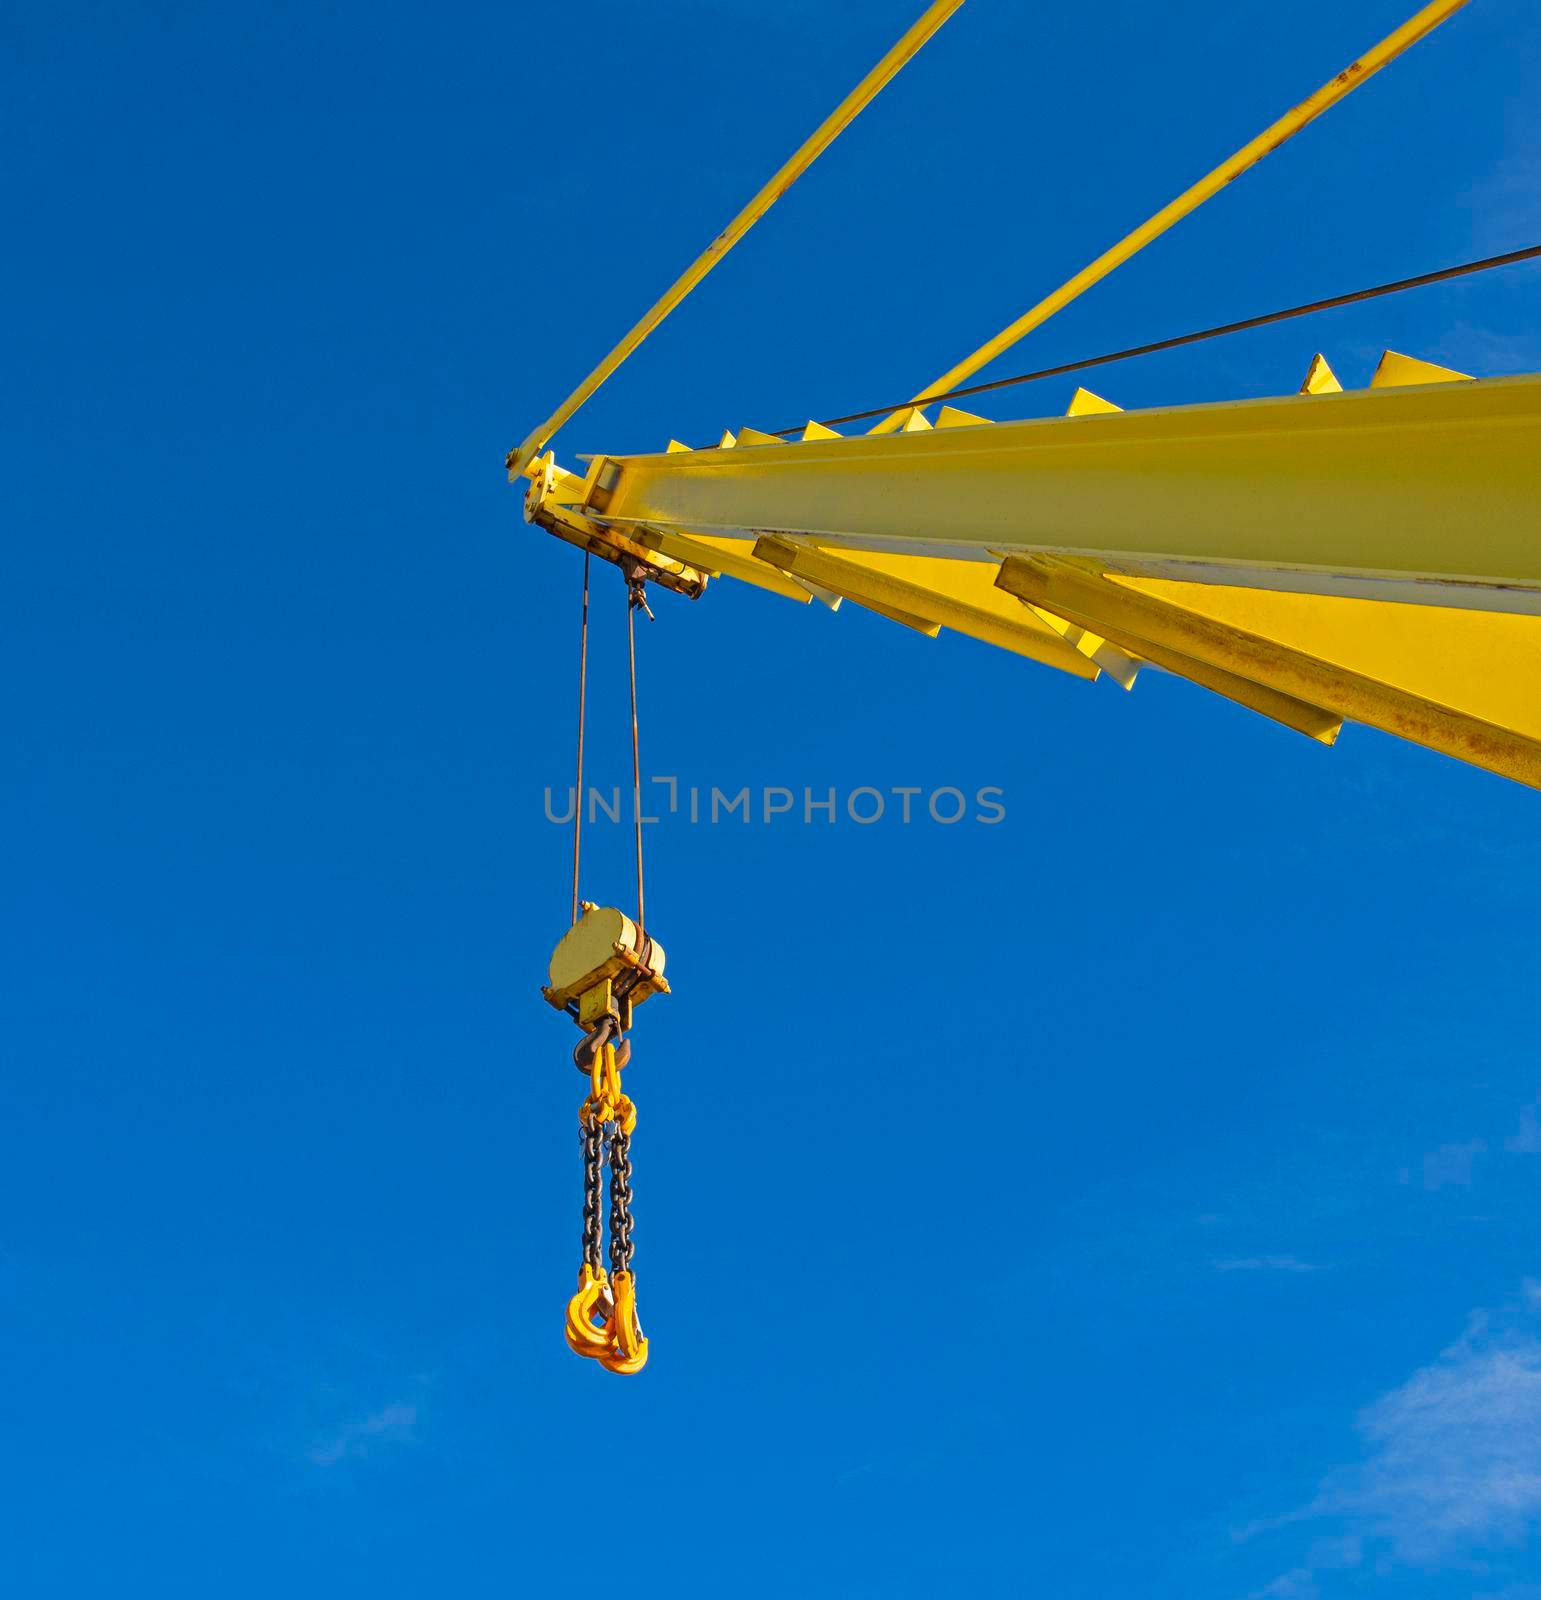 Large crane jib against blue sky background by paulvinten